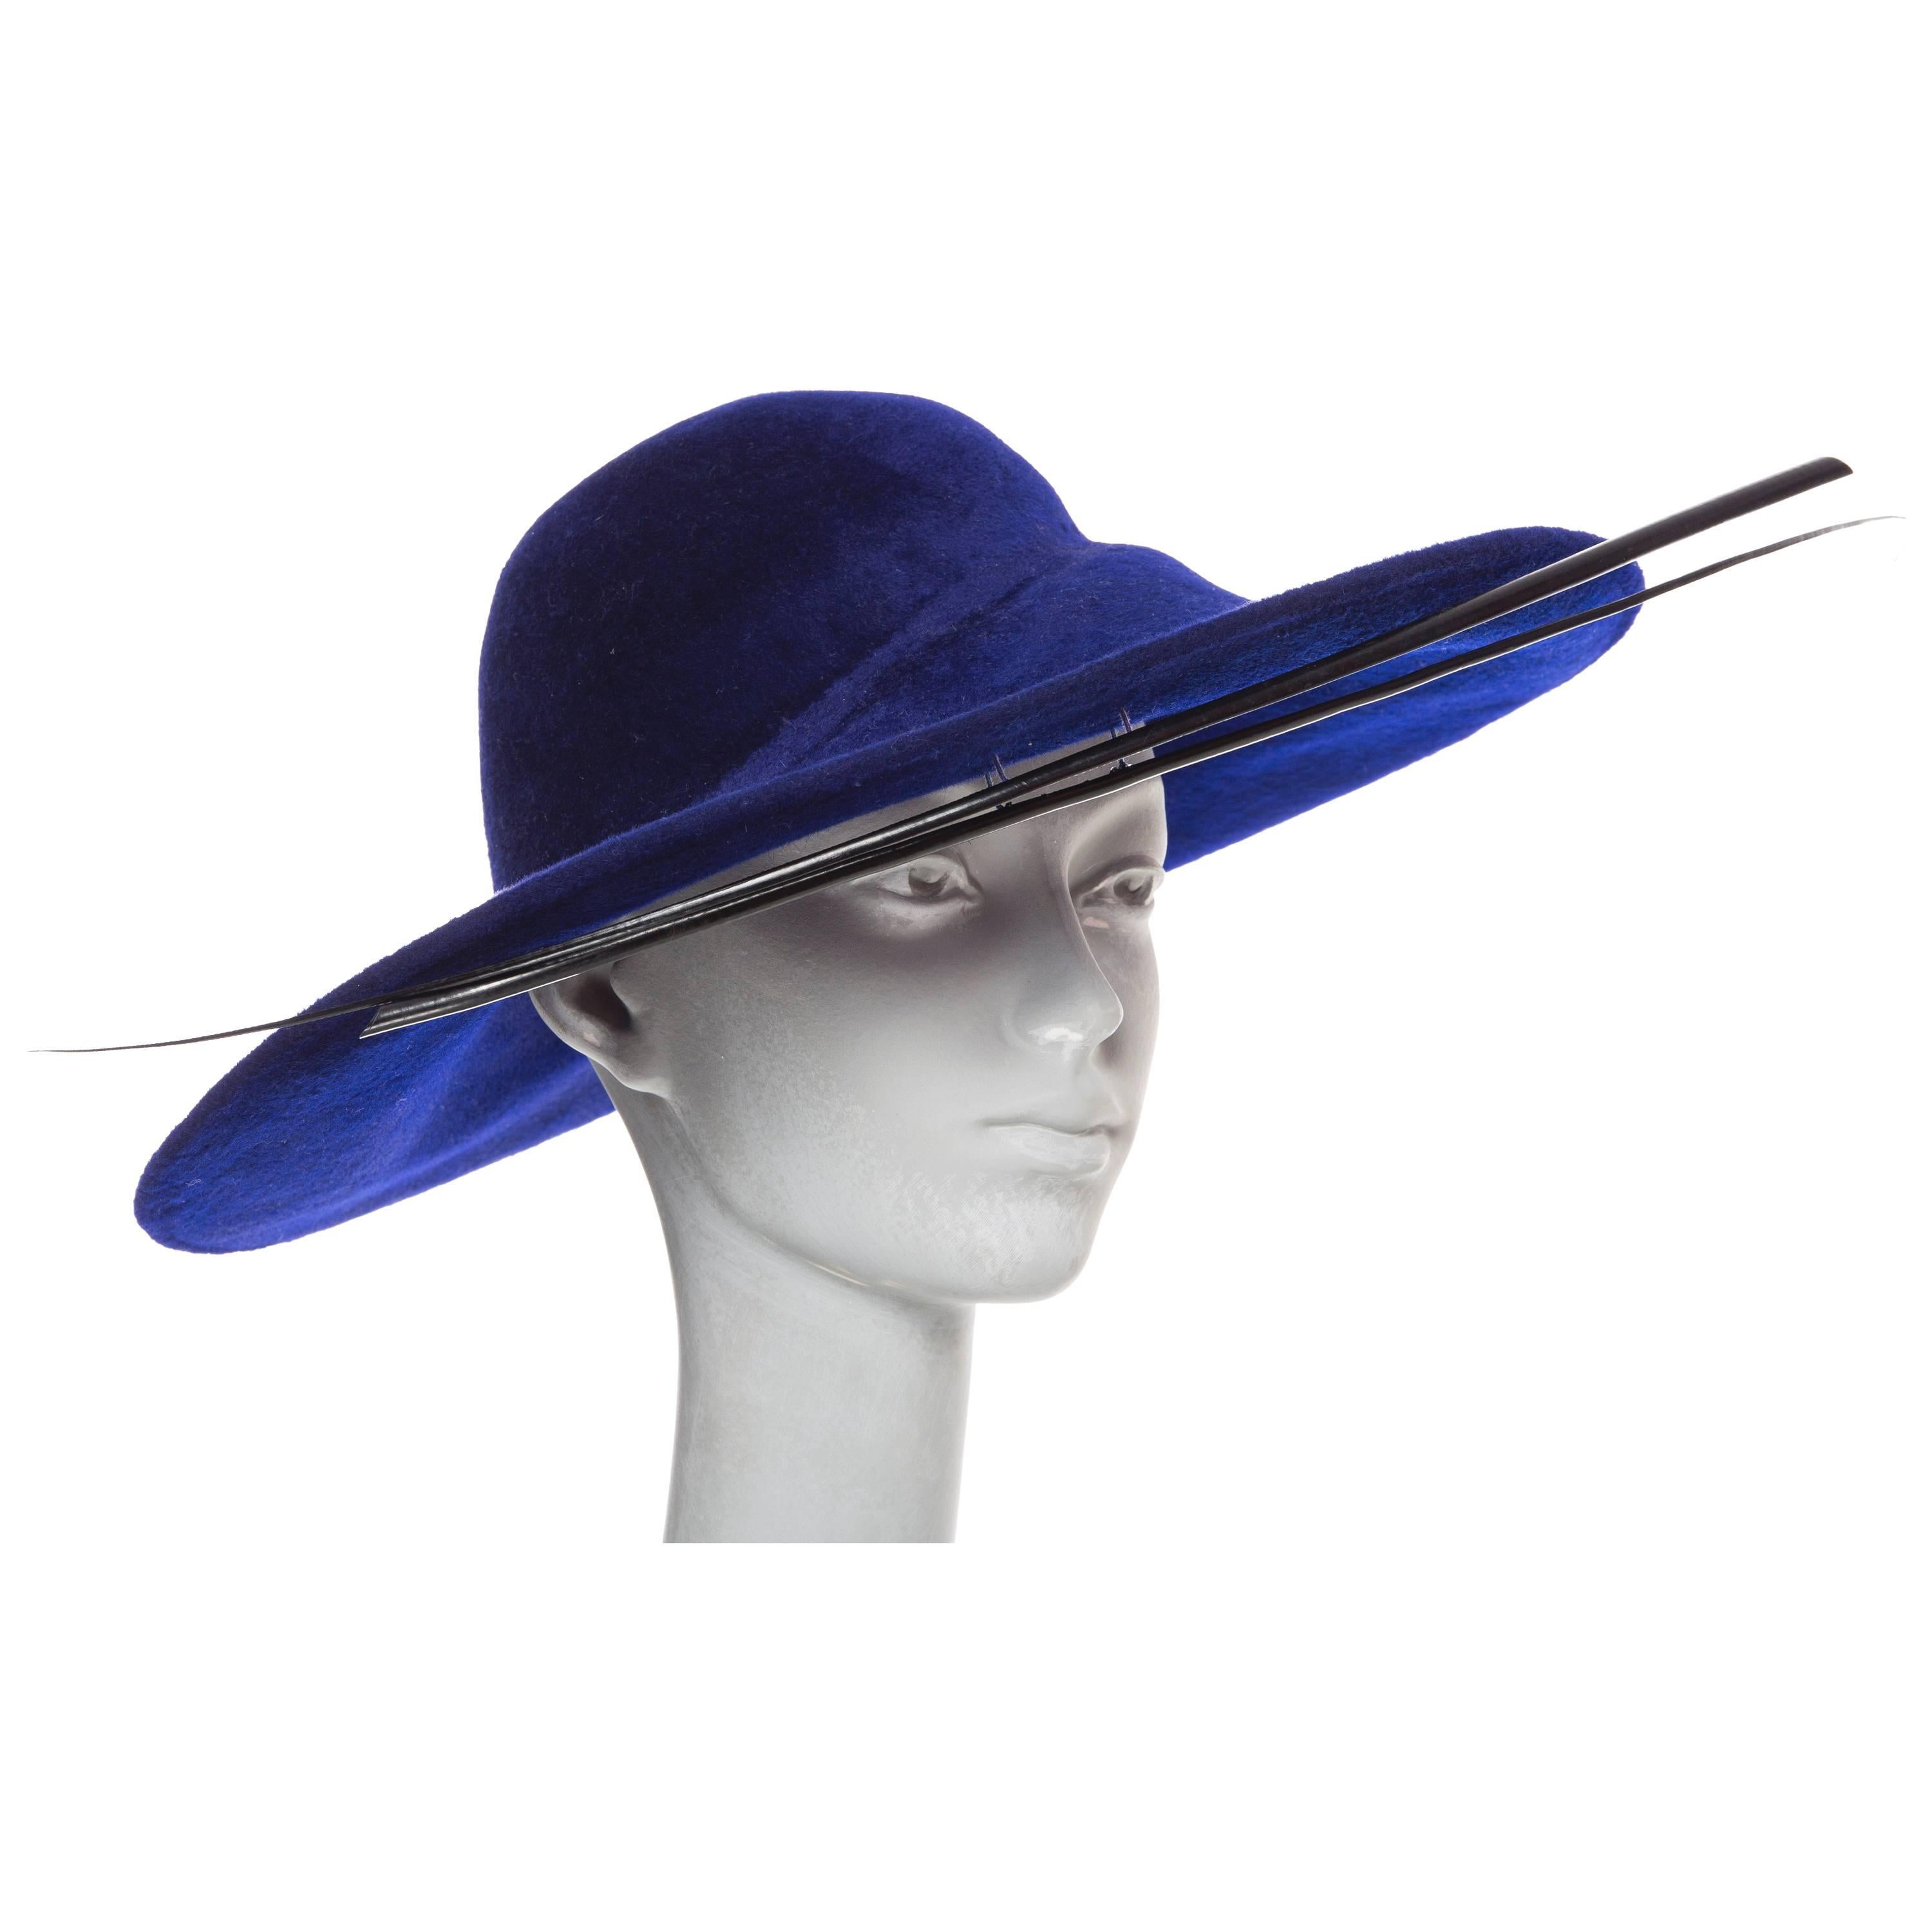 Phillip Treacy indigo wool felt hat with hat box.

Circumference 20”, Brim 5”